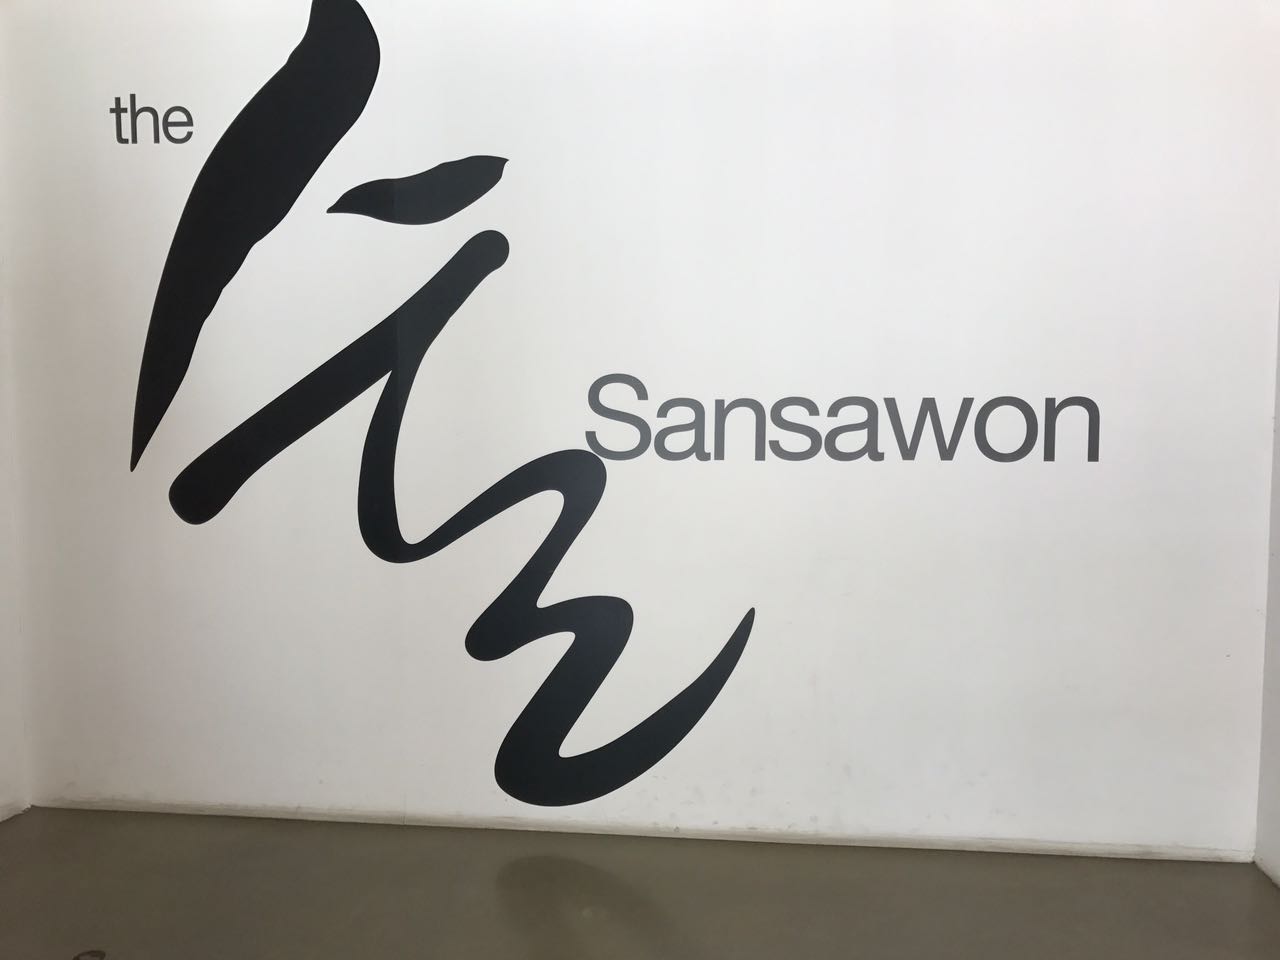 Sansawon